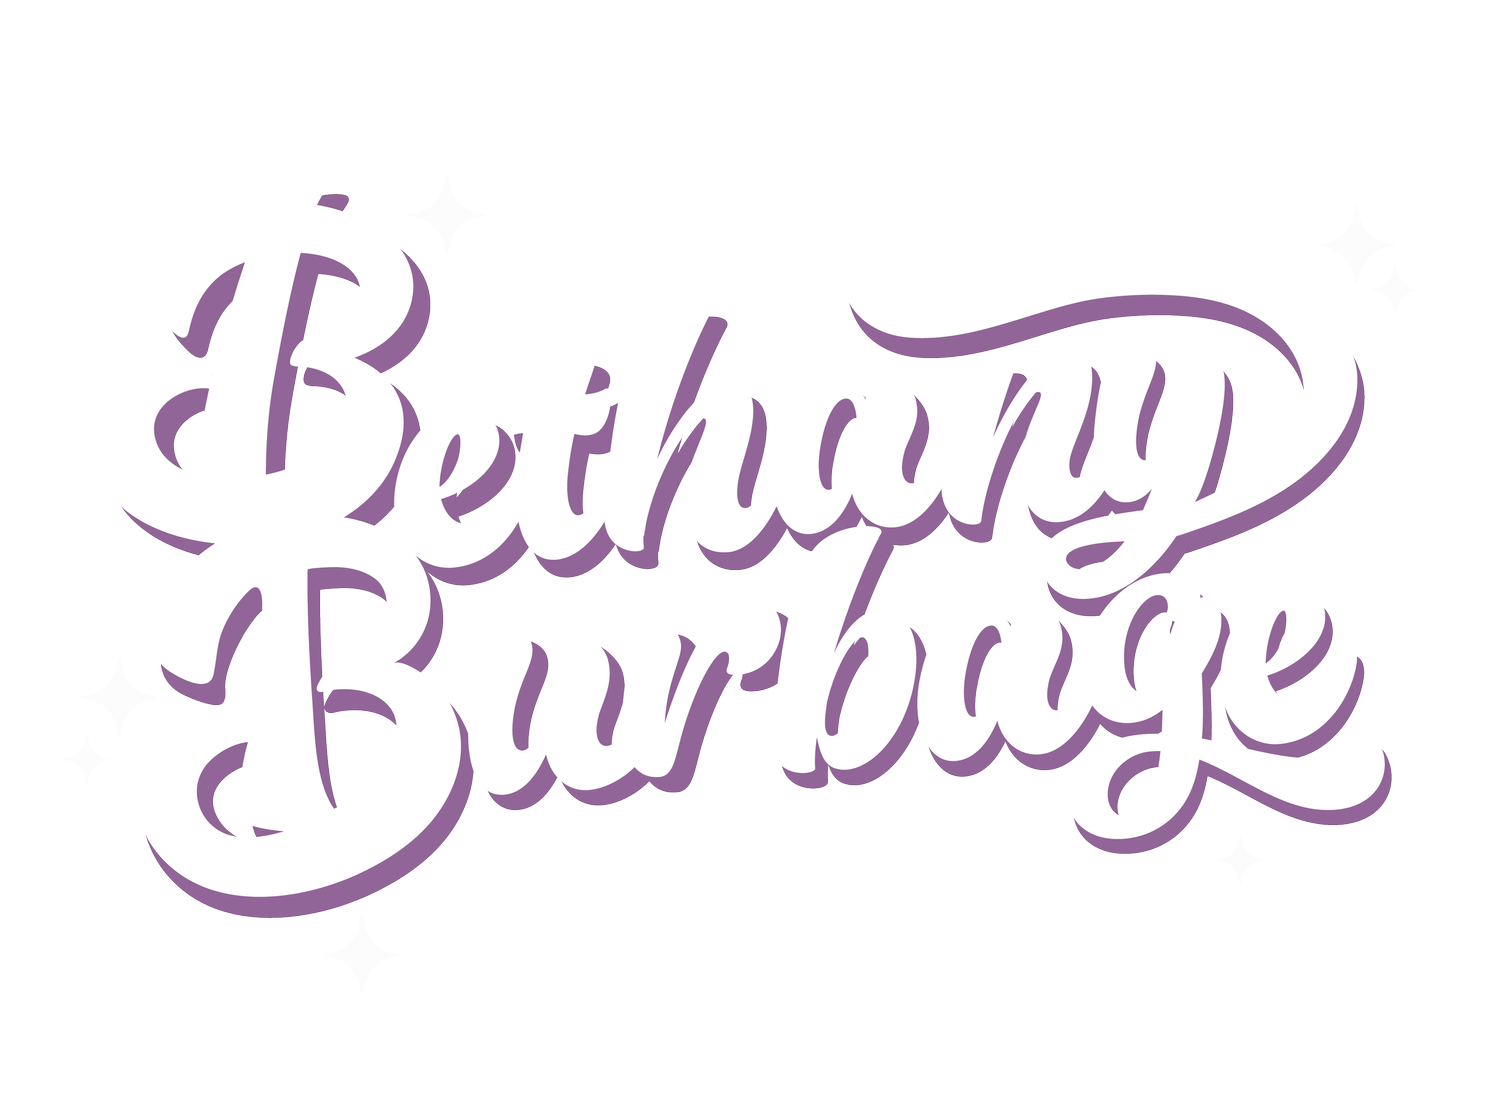 Bethany Burbage